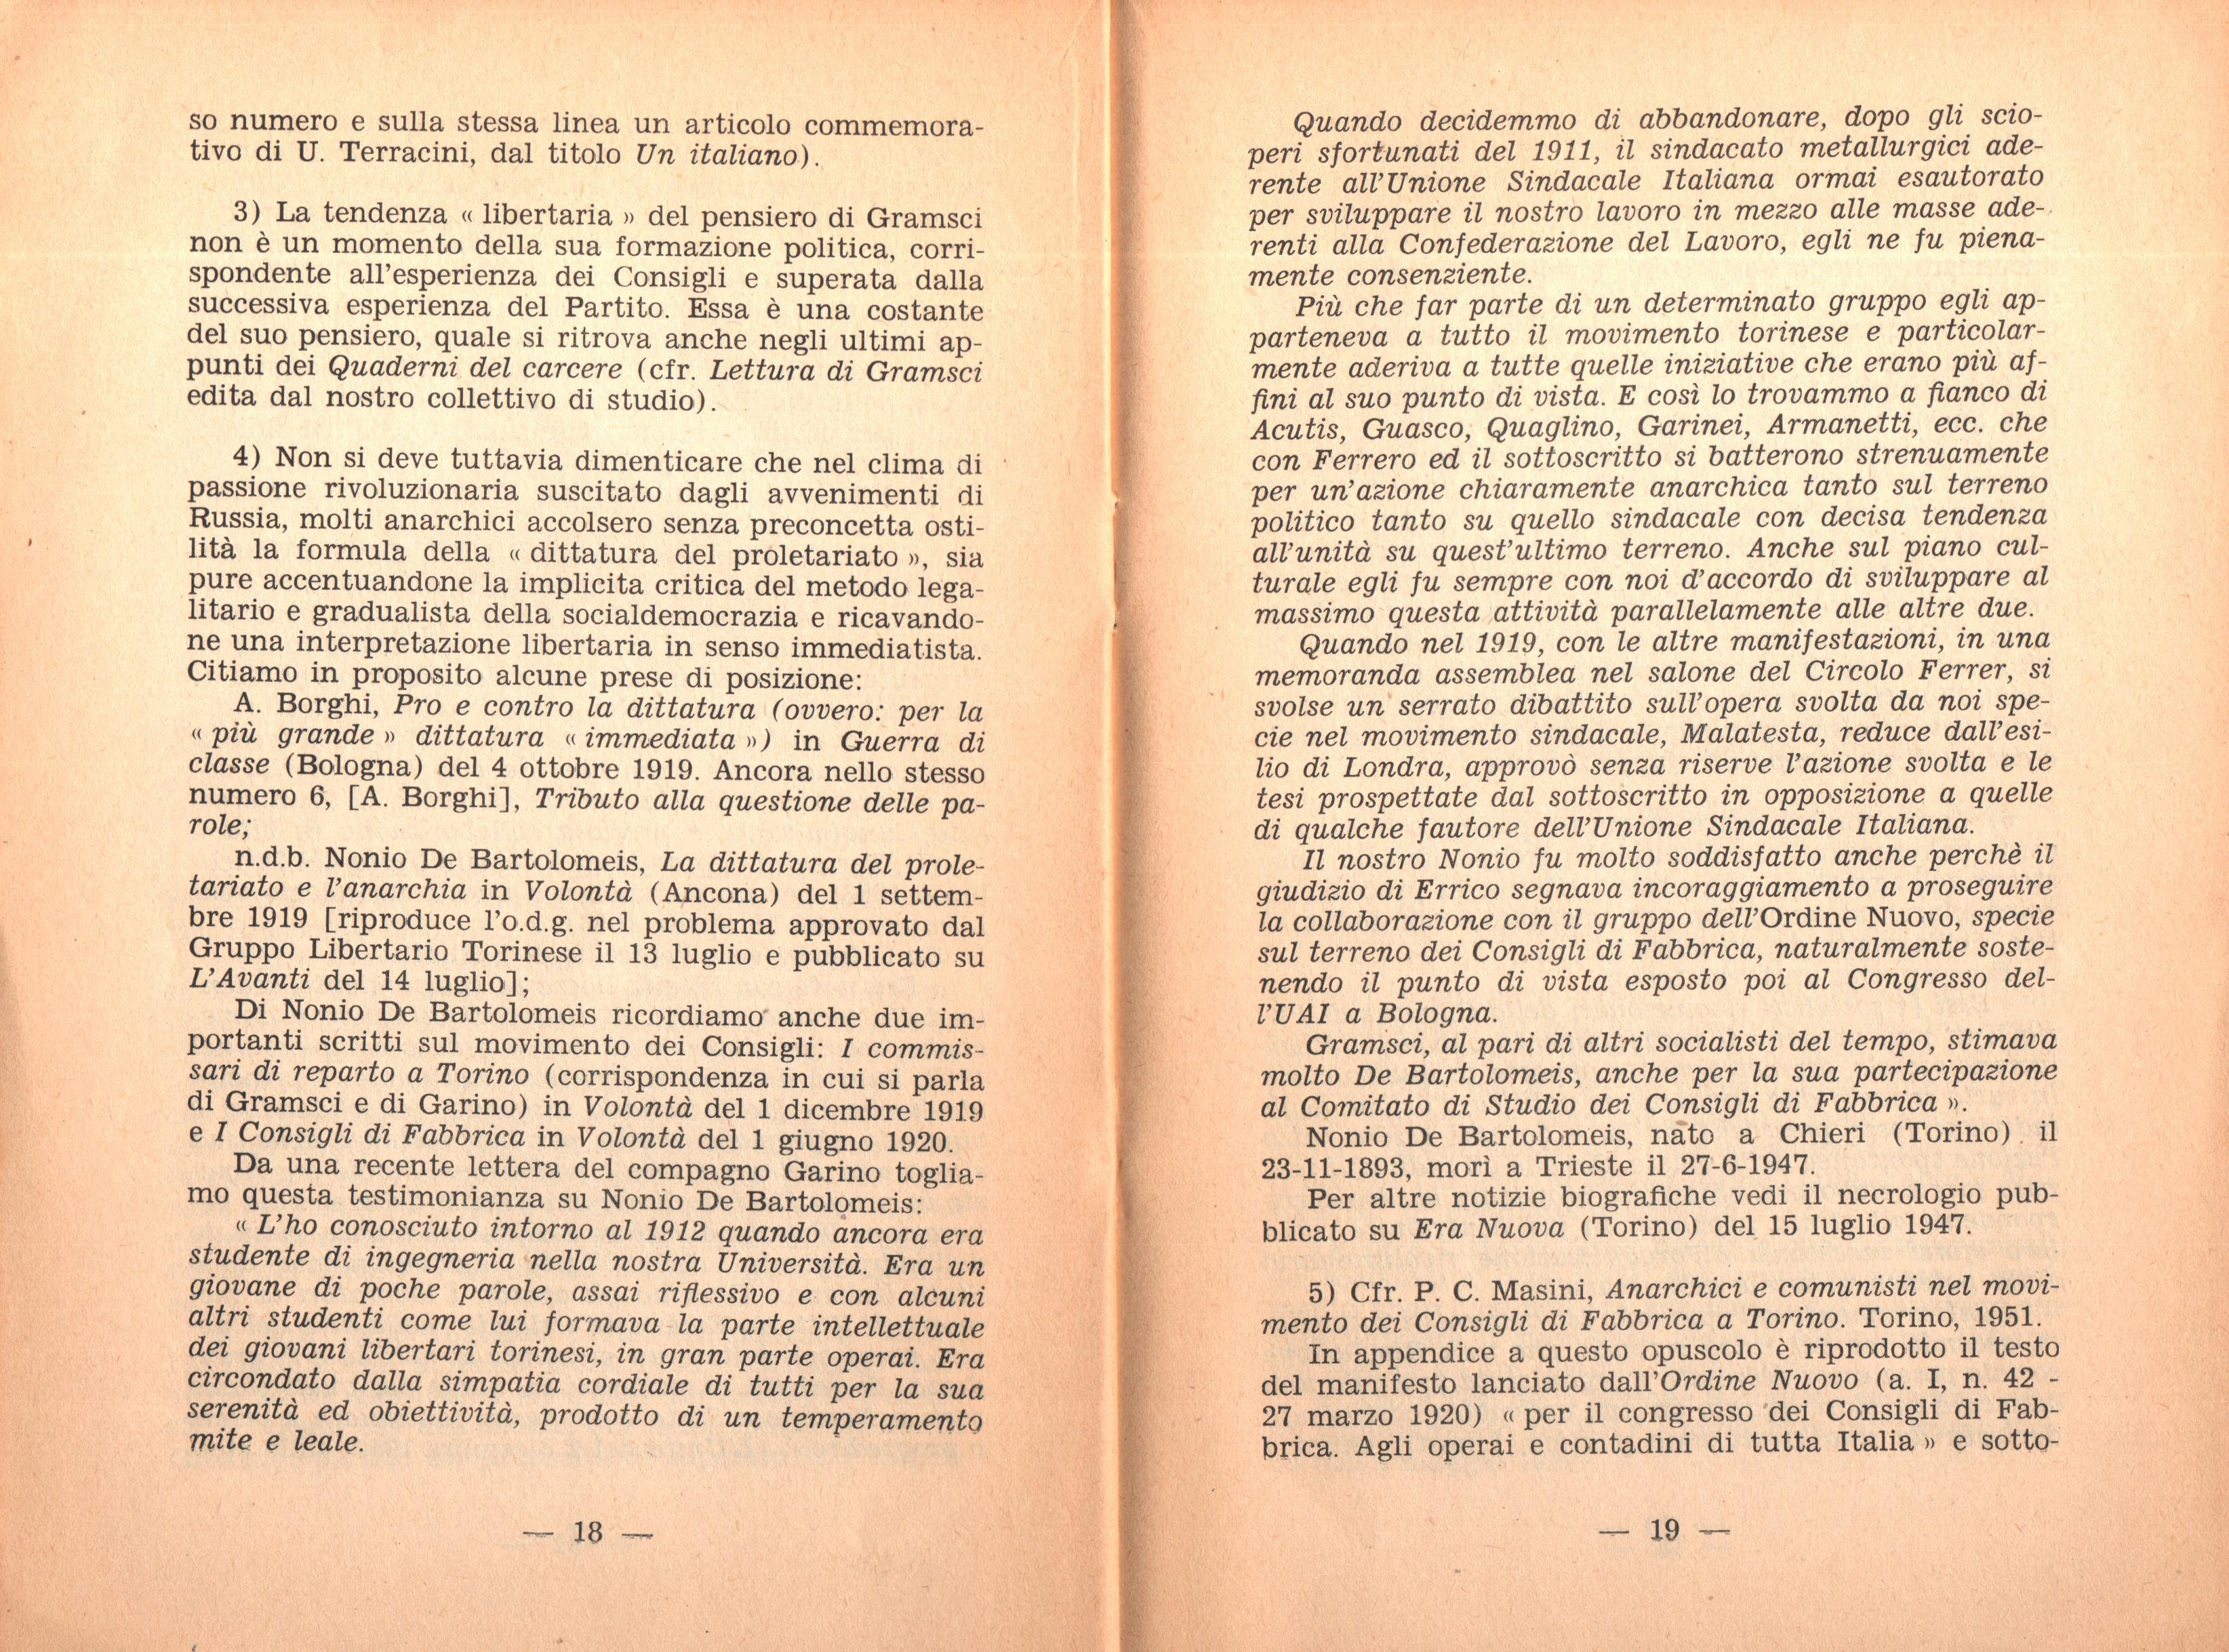 Pier Carlo Masini, Antonio Gramsci - pag. 11